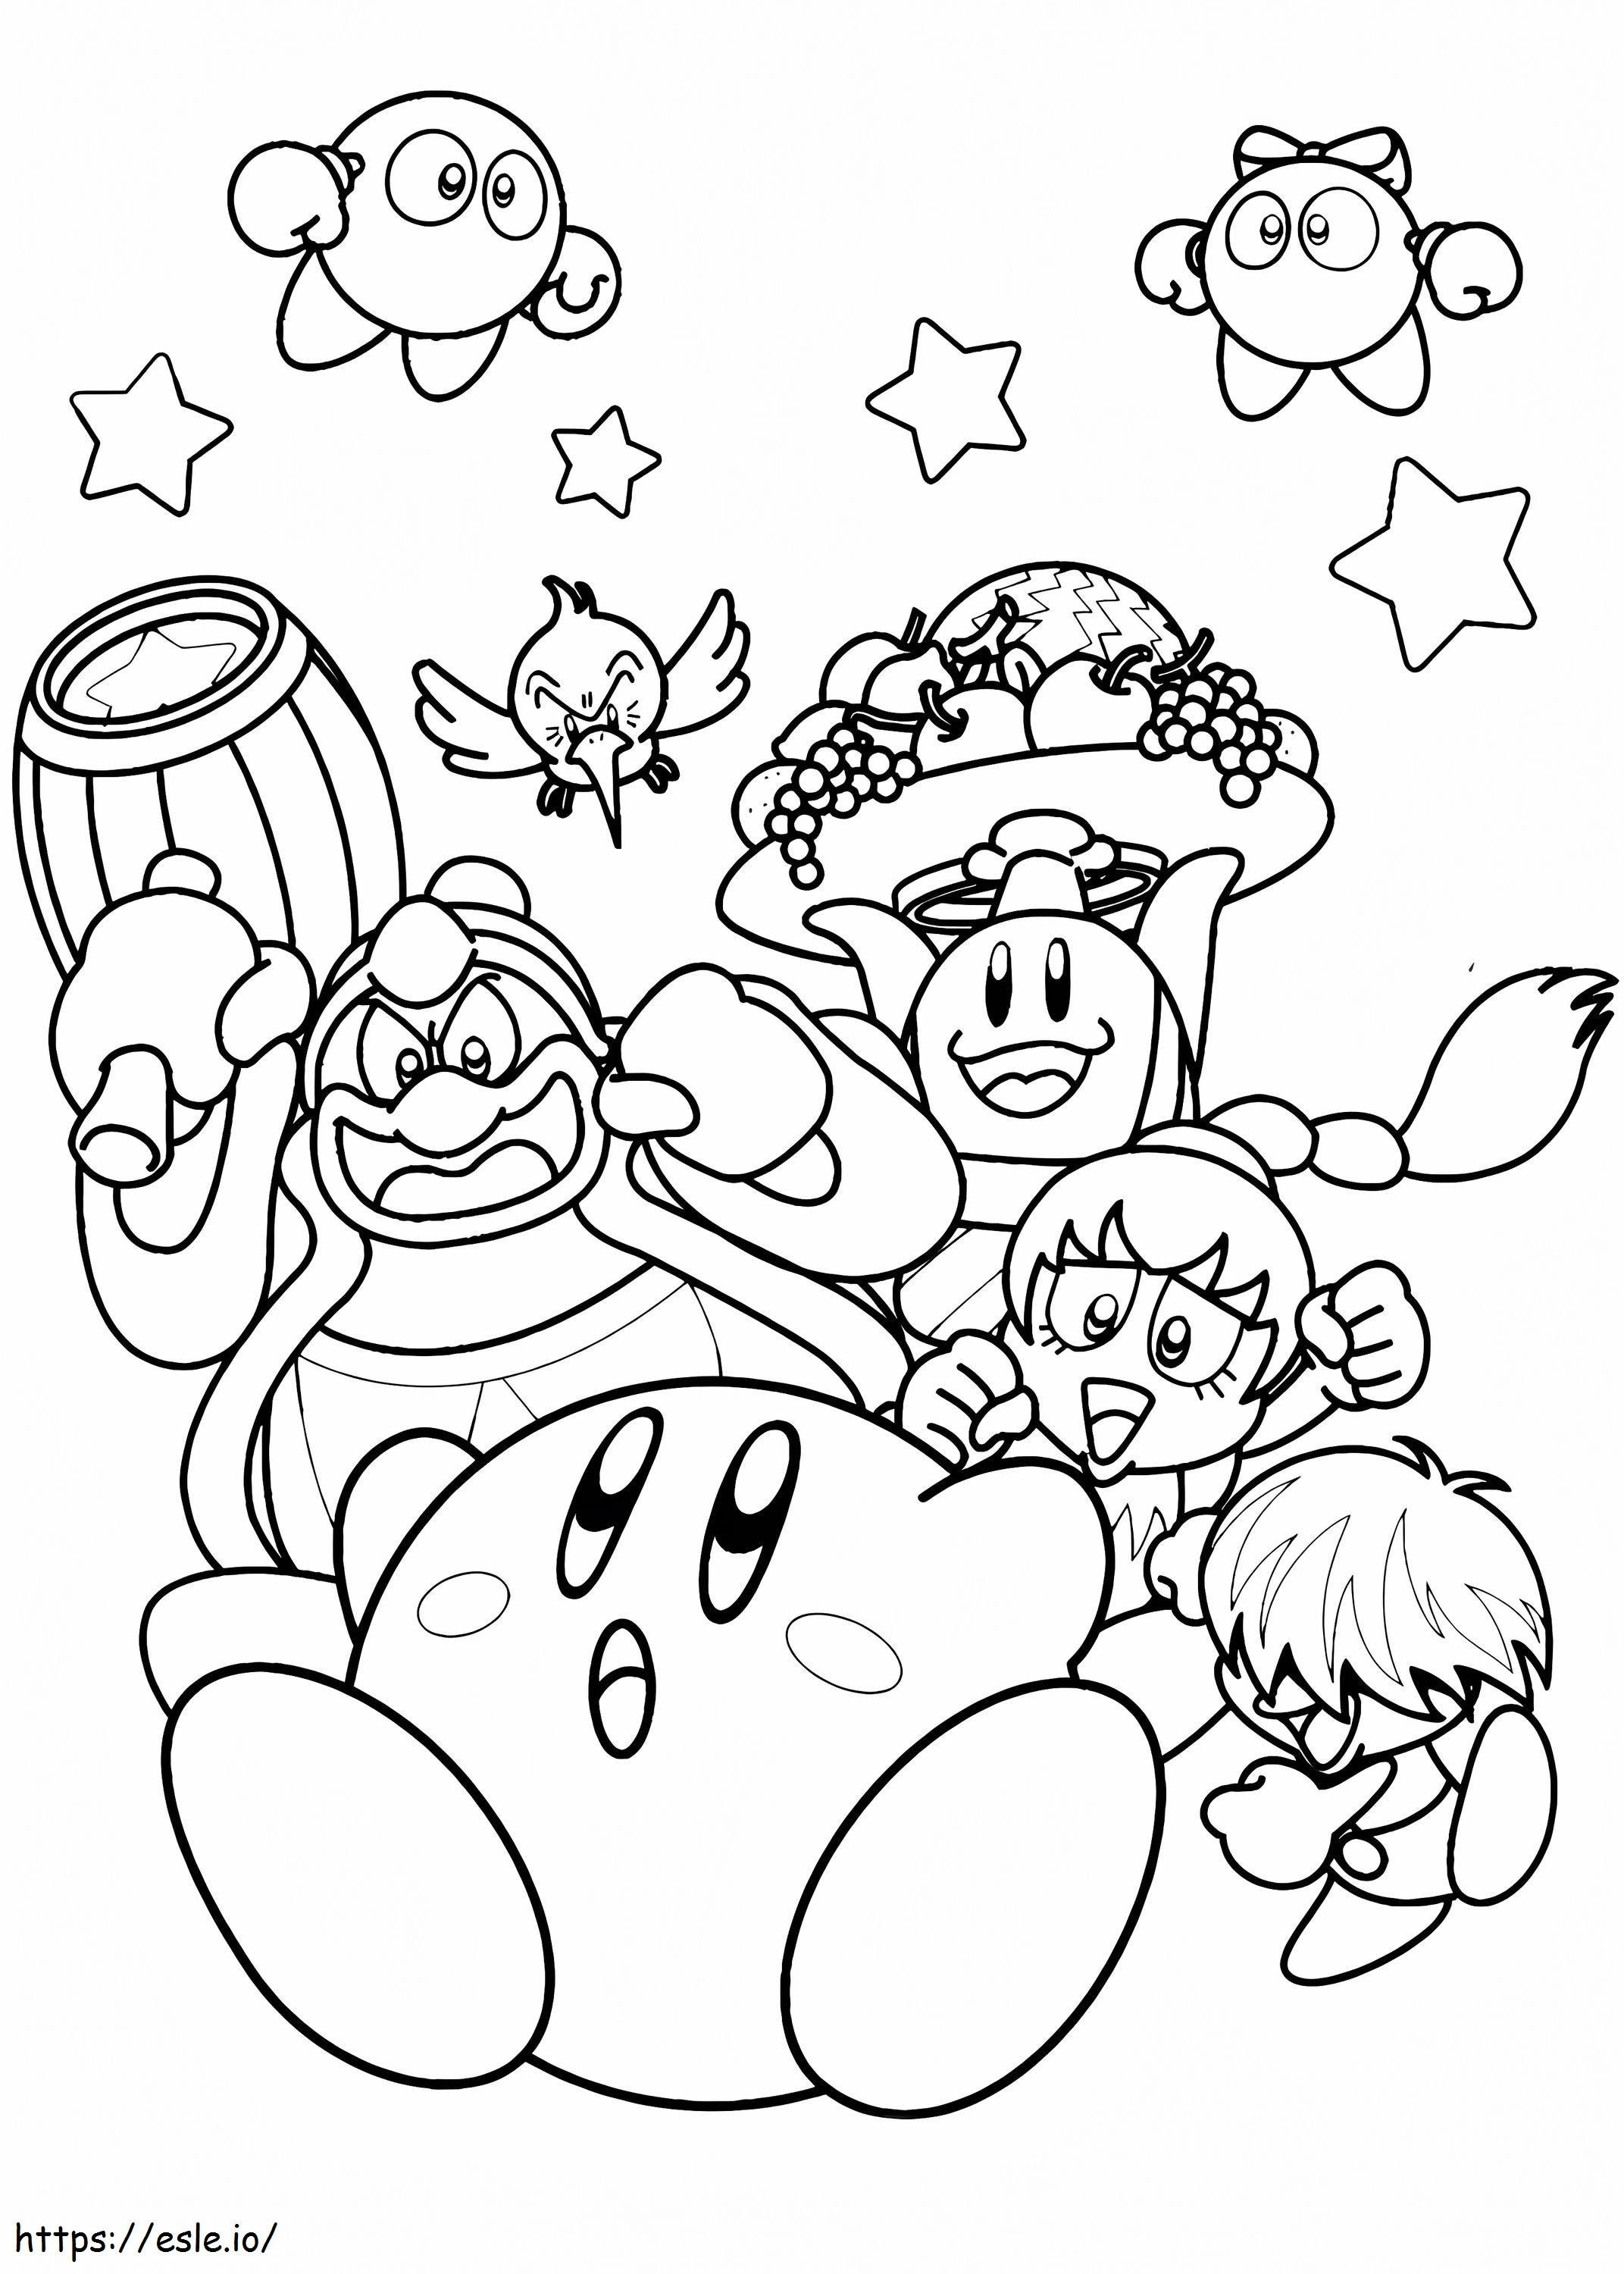 1575687546 Nintendo Kirby kolorowanka